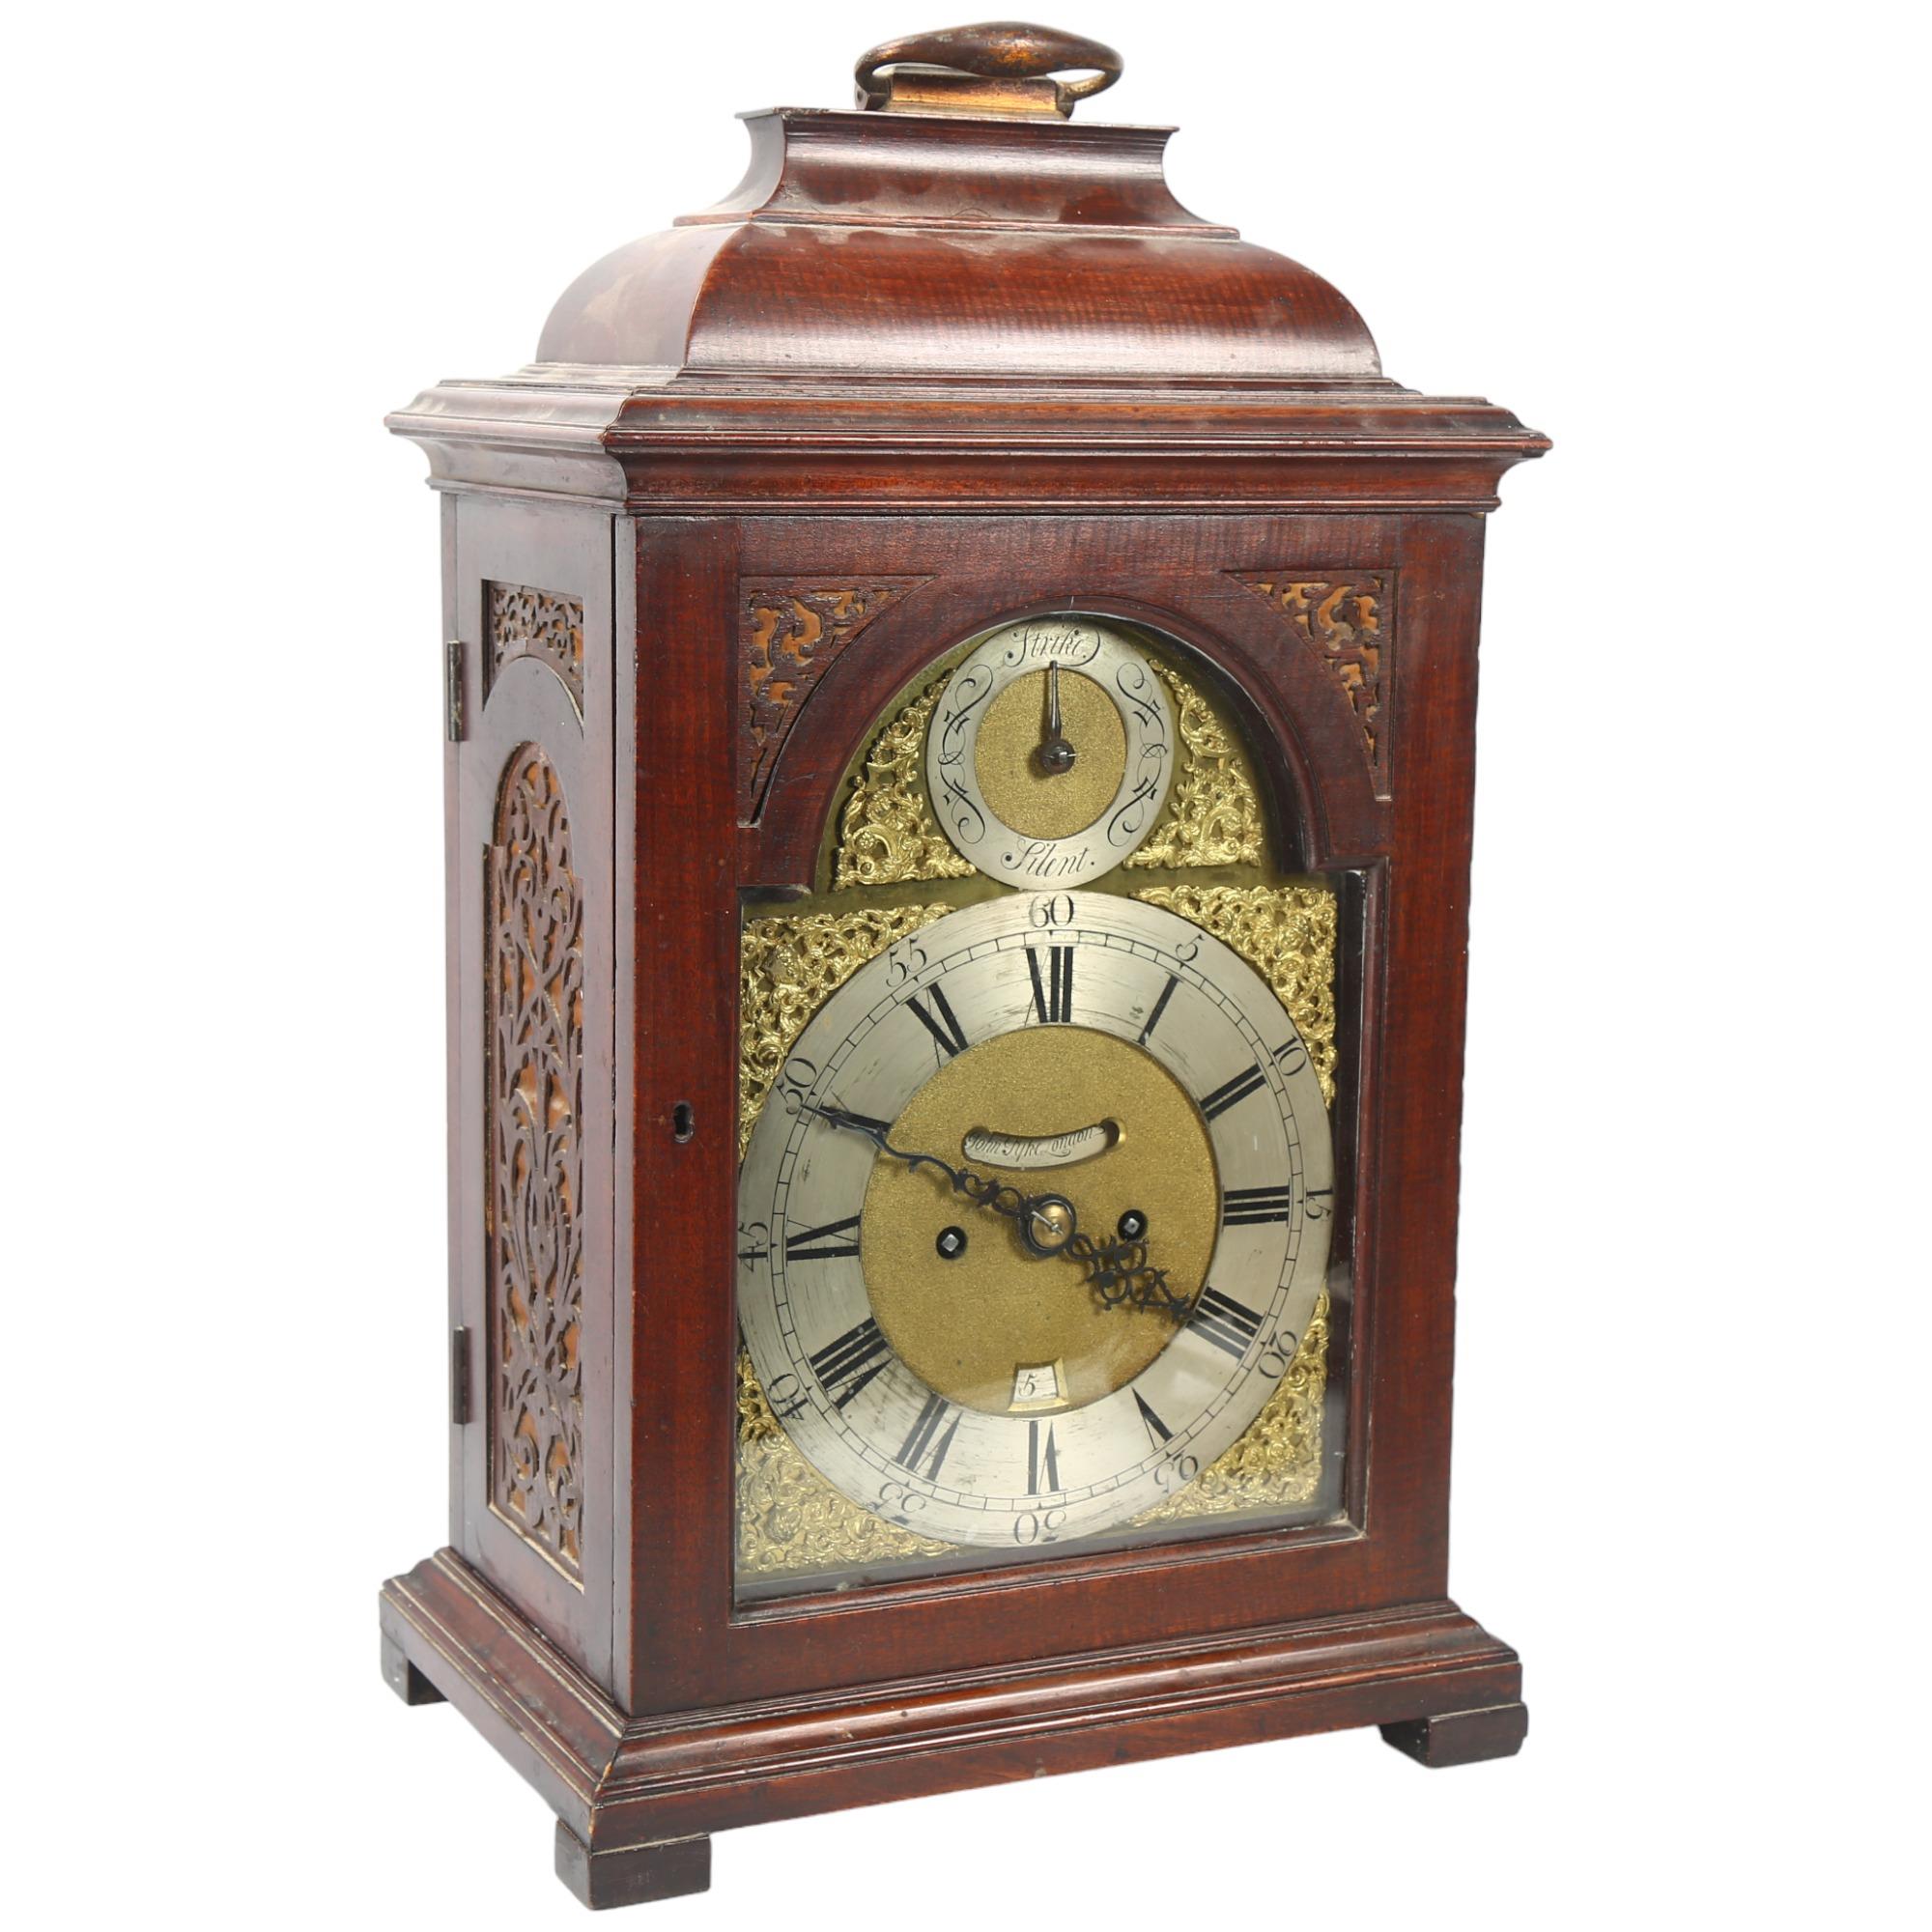 An 18th century English mahogany-cased 8-day bracket clock, by John Pyke of London, the brass arch-